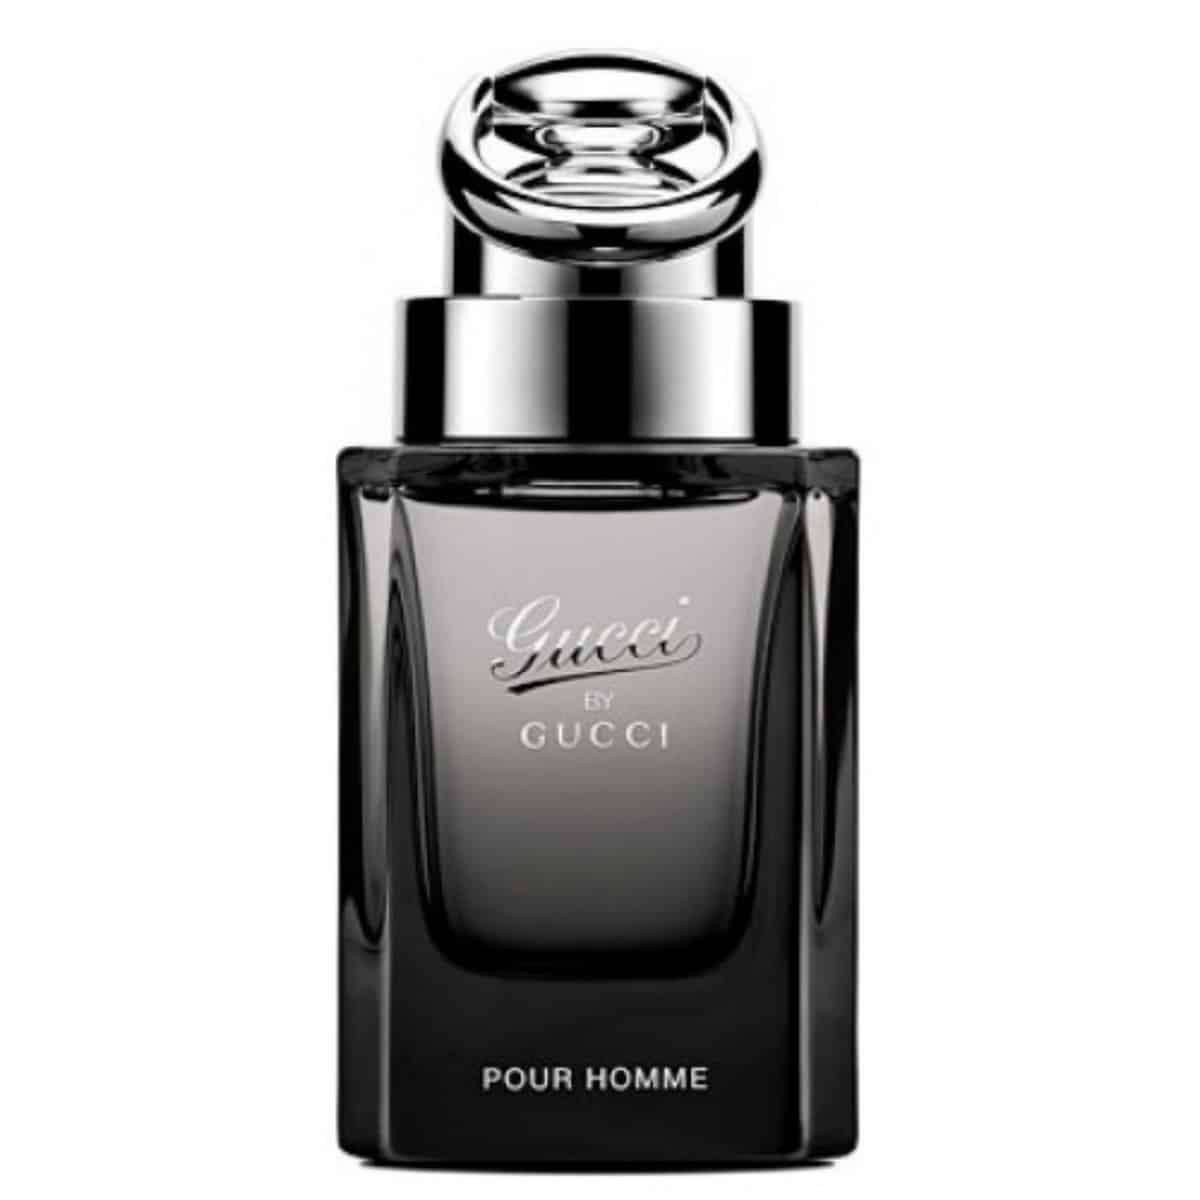 Gucci perfume men